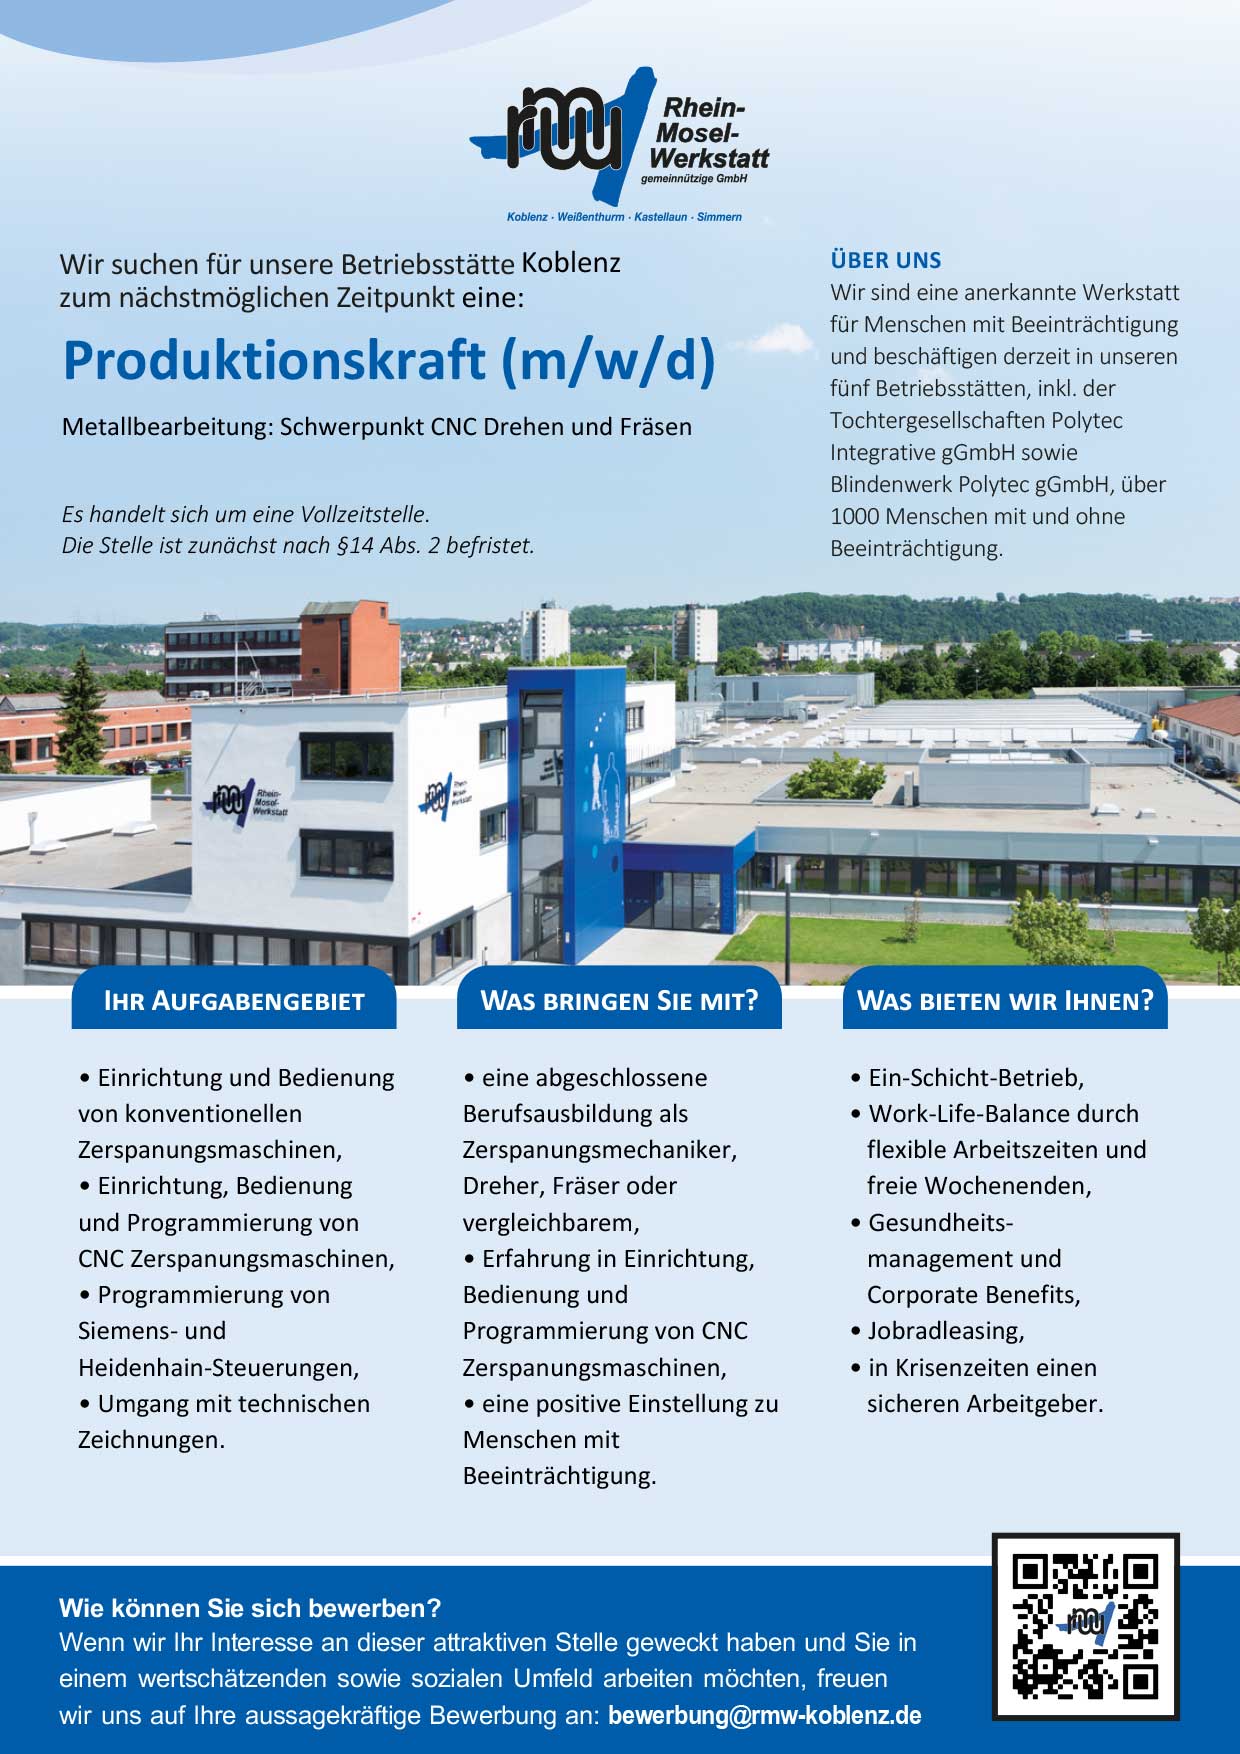 Produktionskraft (m/w/d) - Metallbearbeitung: Schwerpunkt CNC Drehen und Fräsen